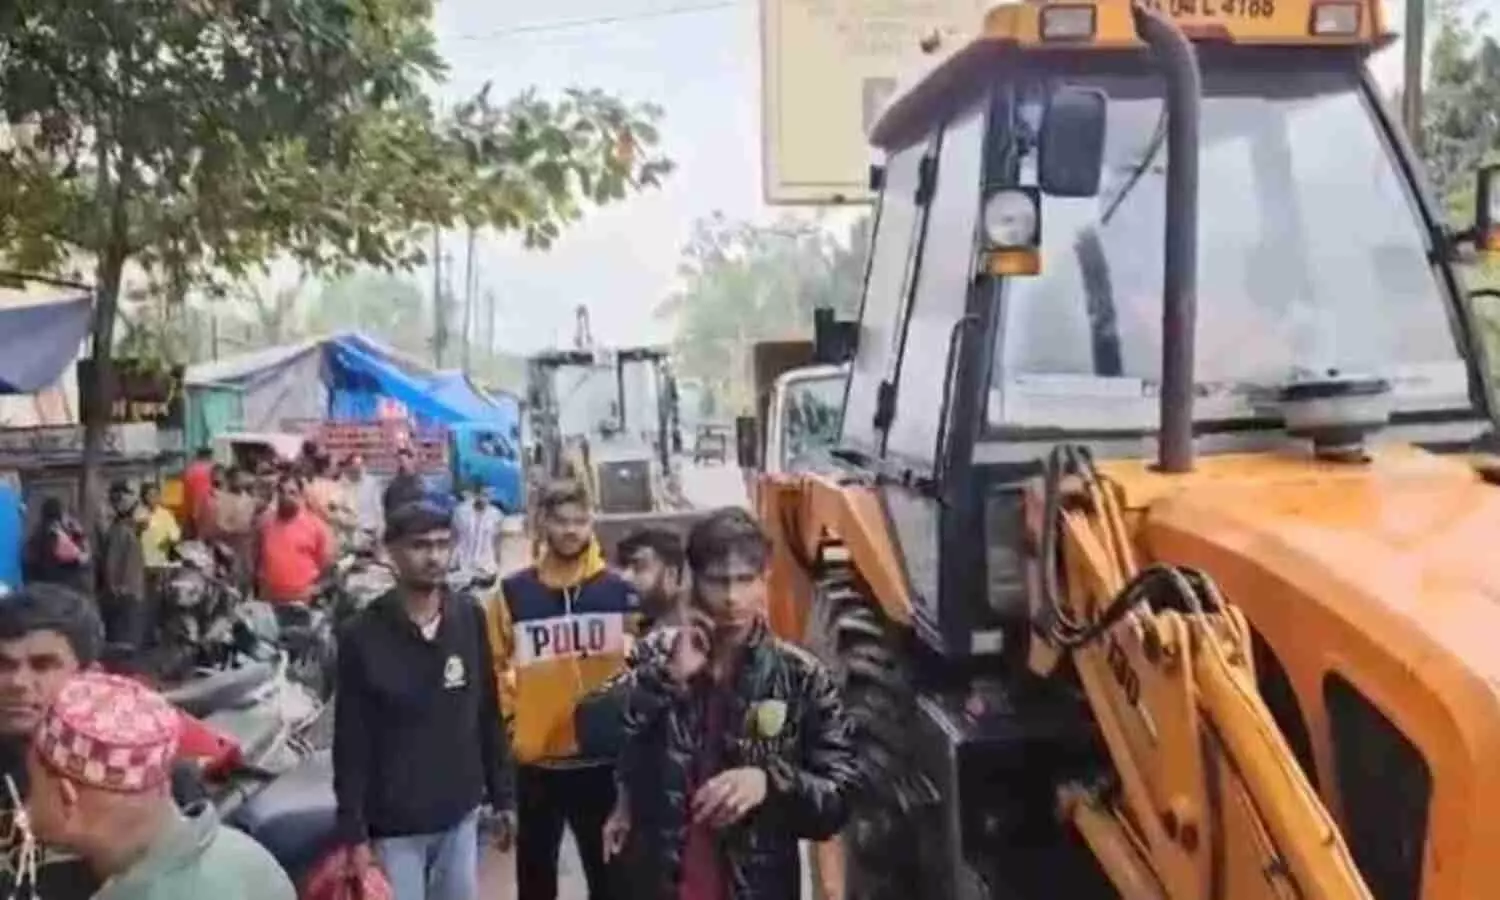 bulldozer action in raipur